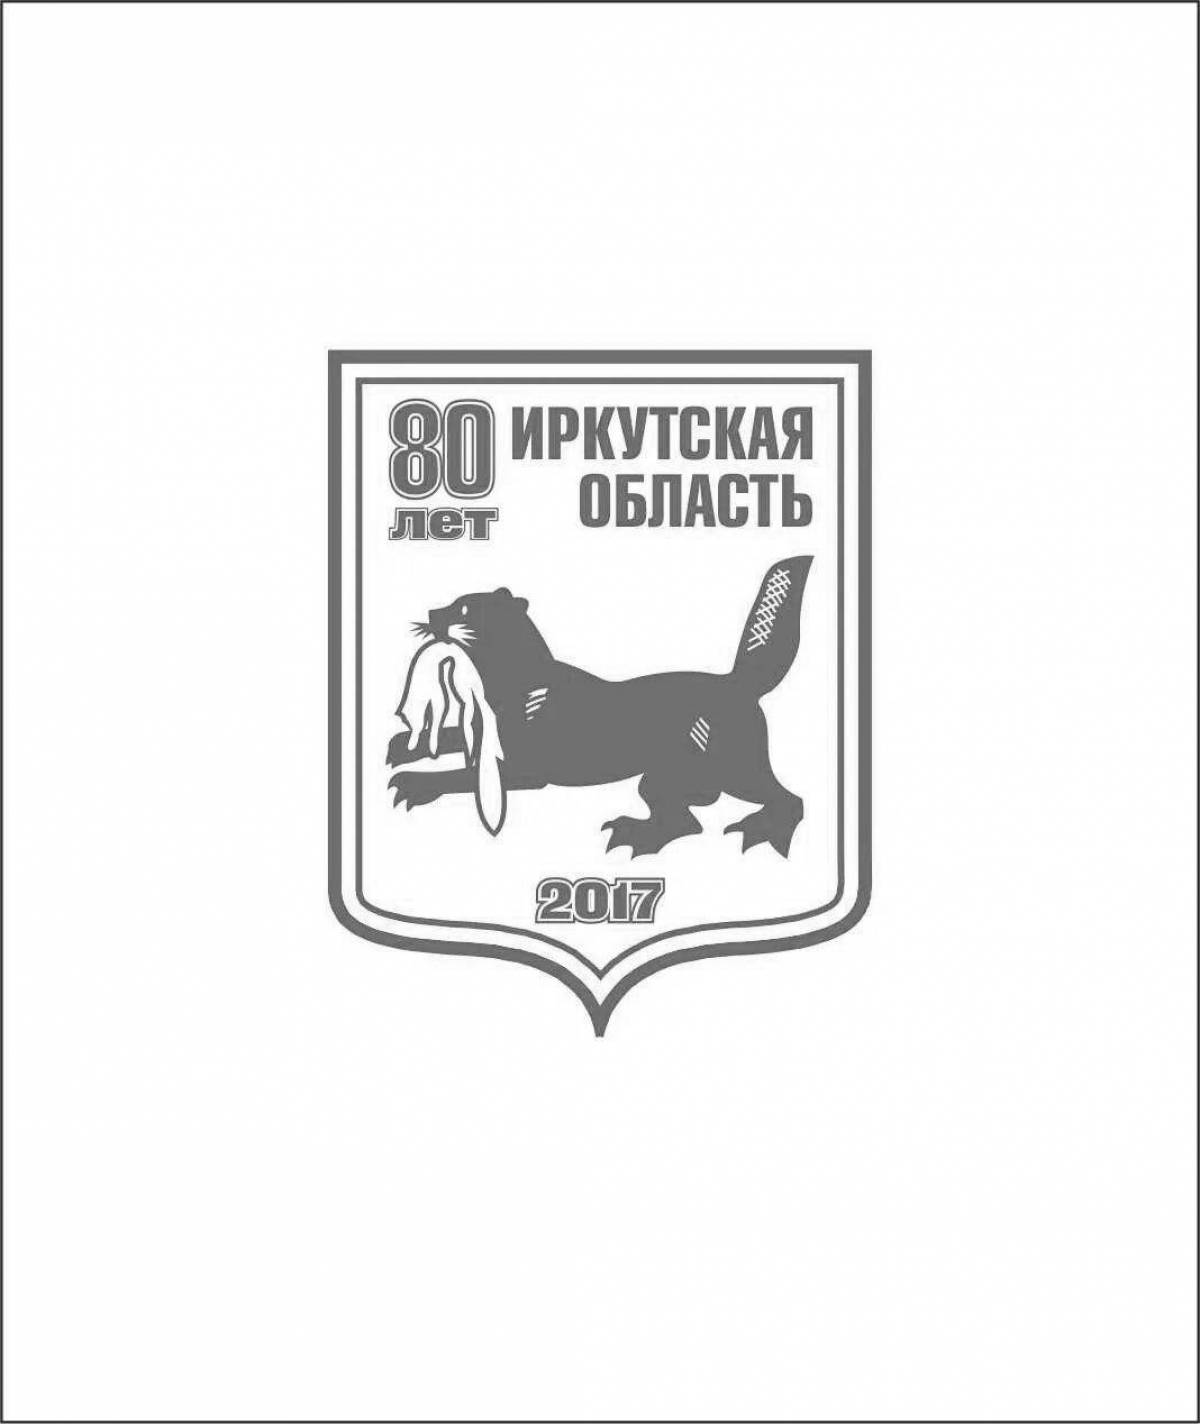 Impressive coloring coat of arms of irkutsk